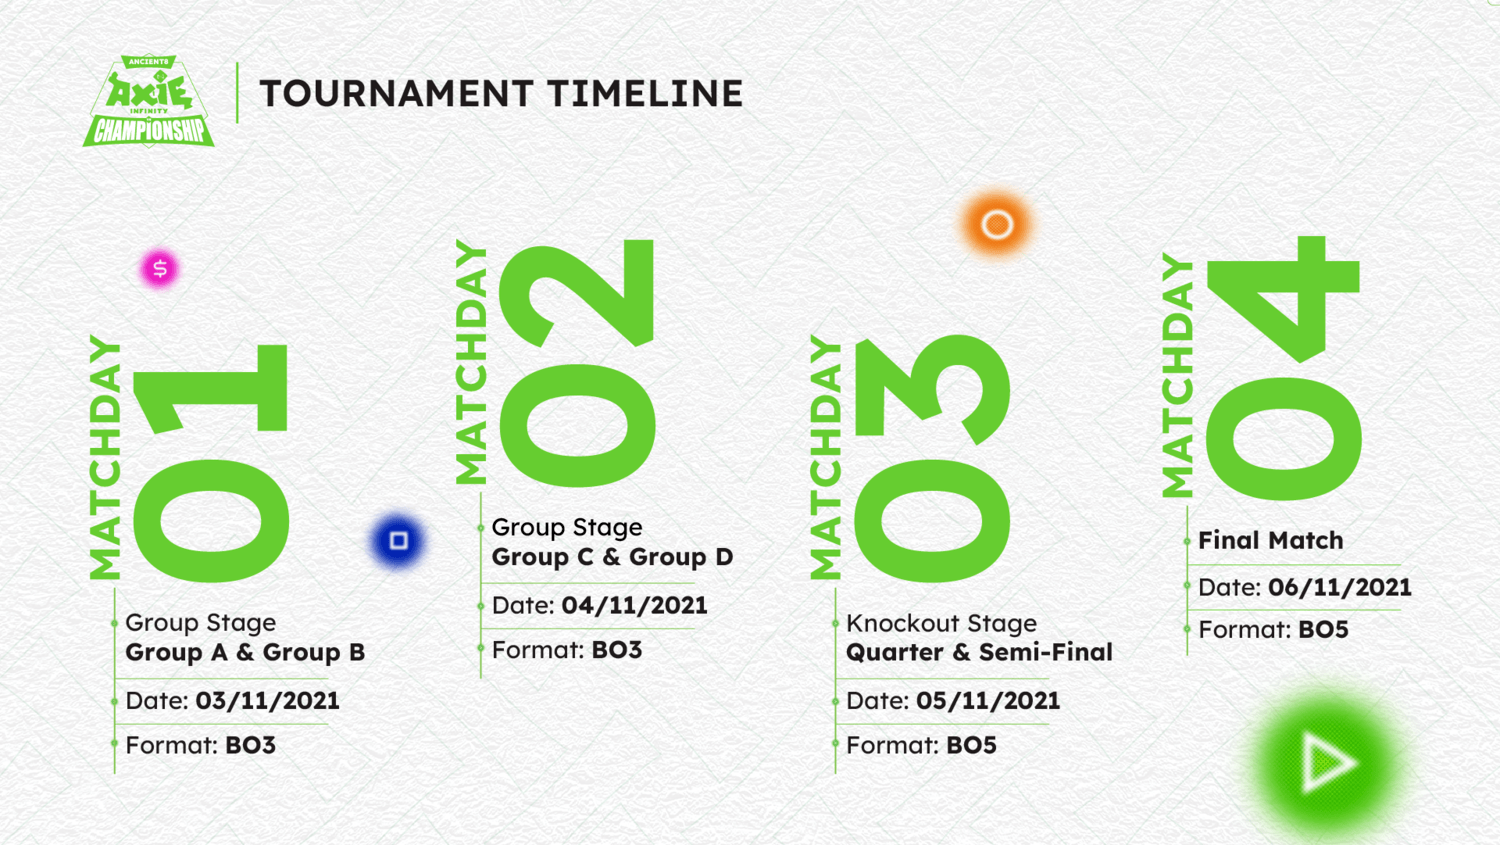 axie championship tournament timeline